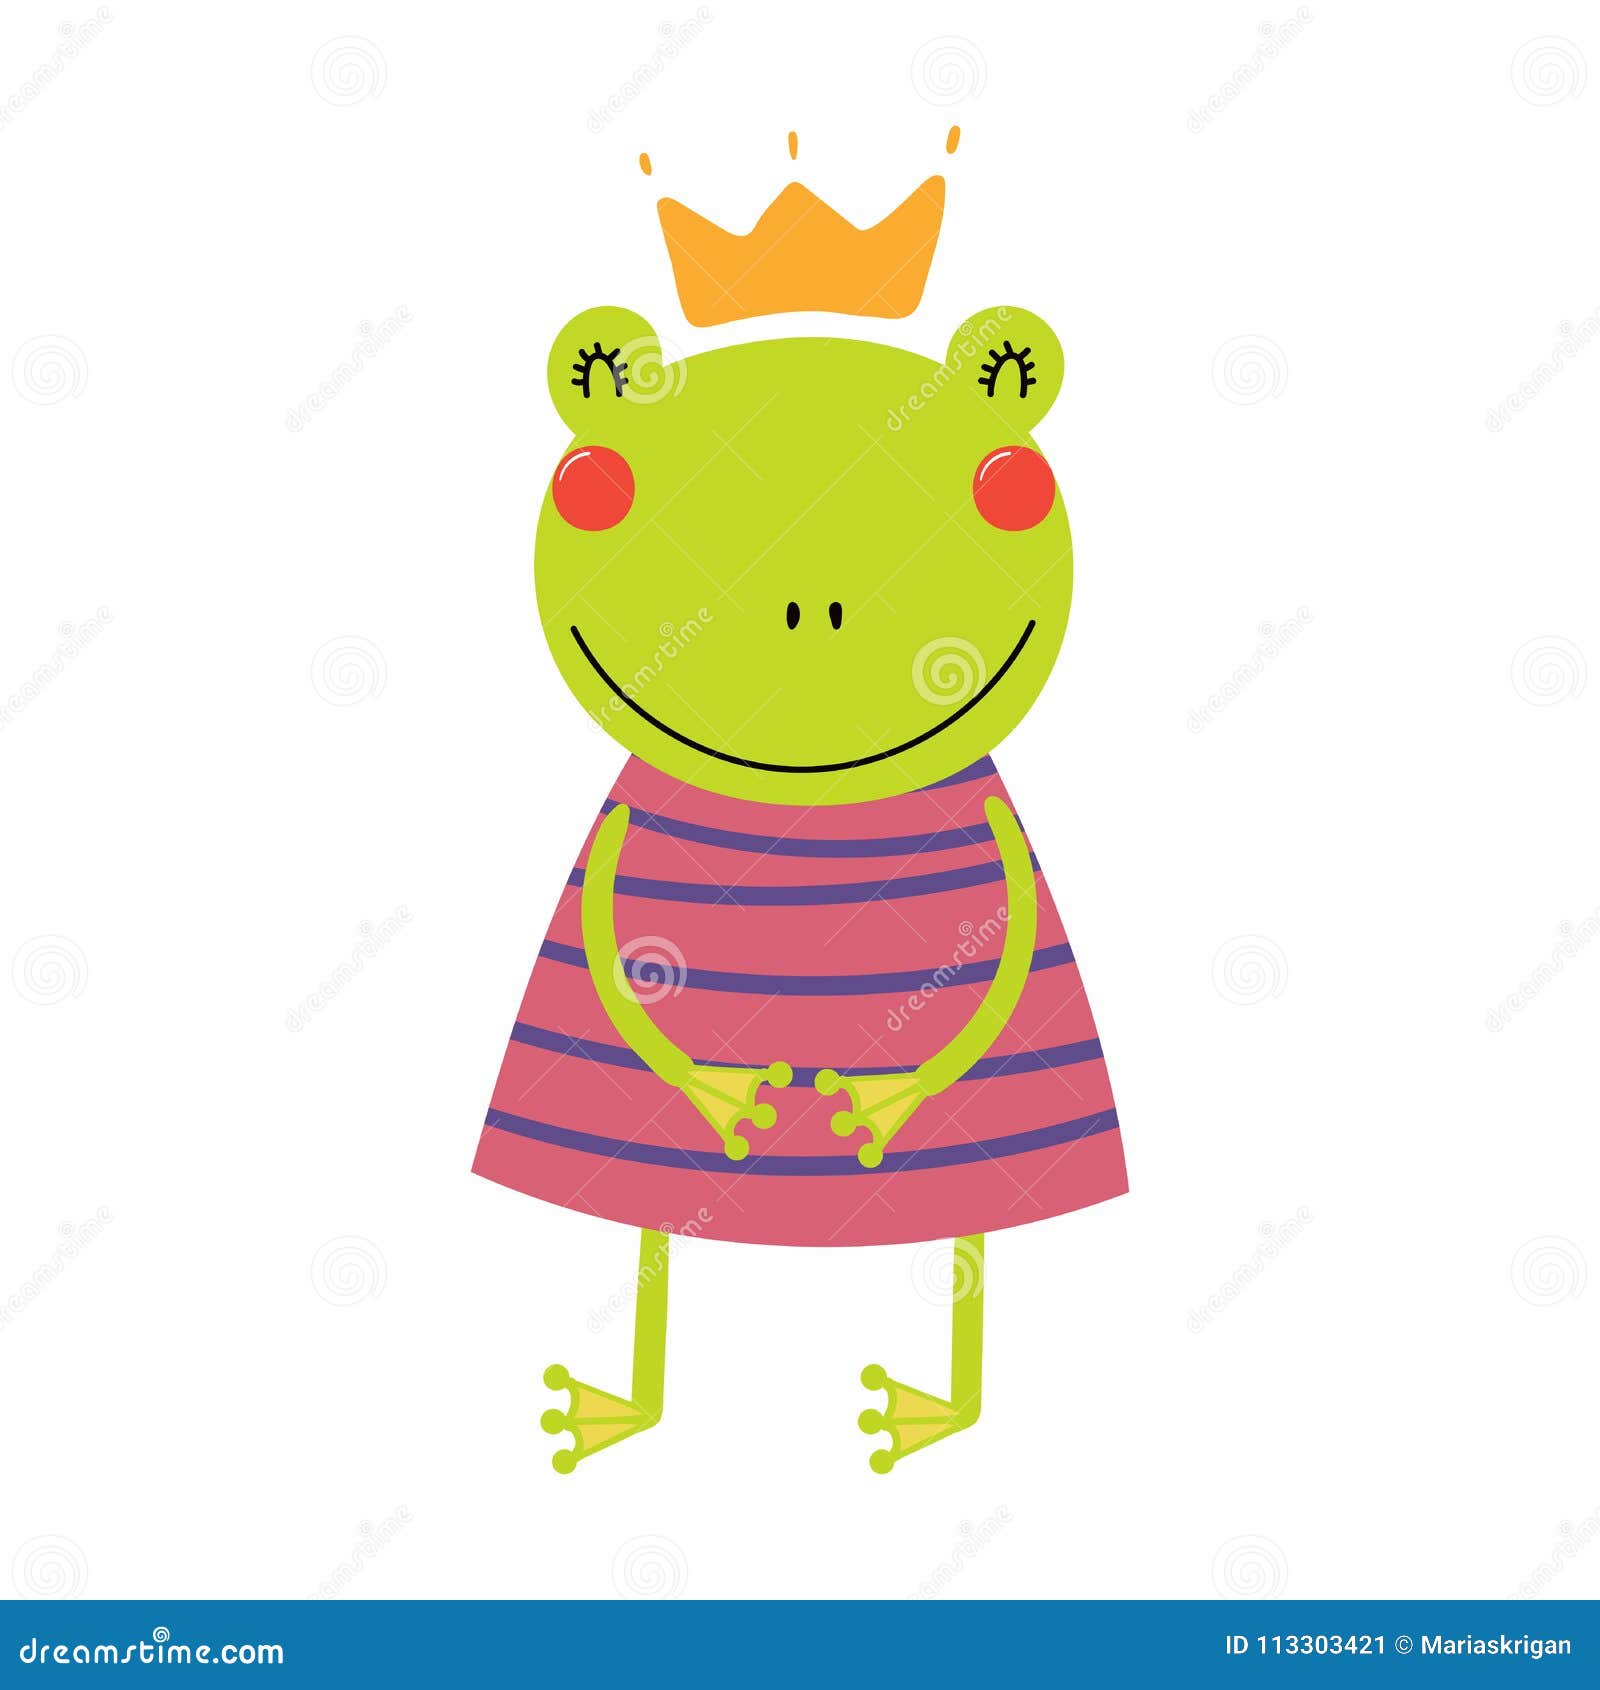 Cute frog princess stock vector. Illustration of cute - 113303421